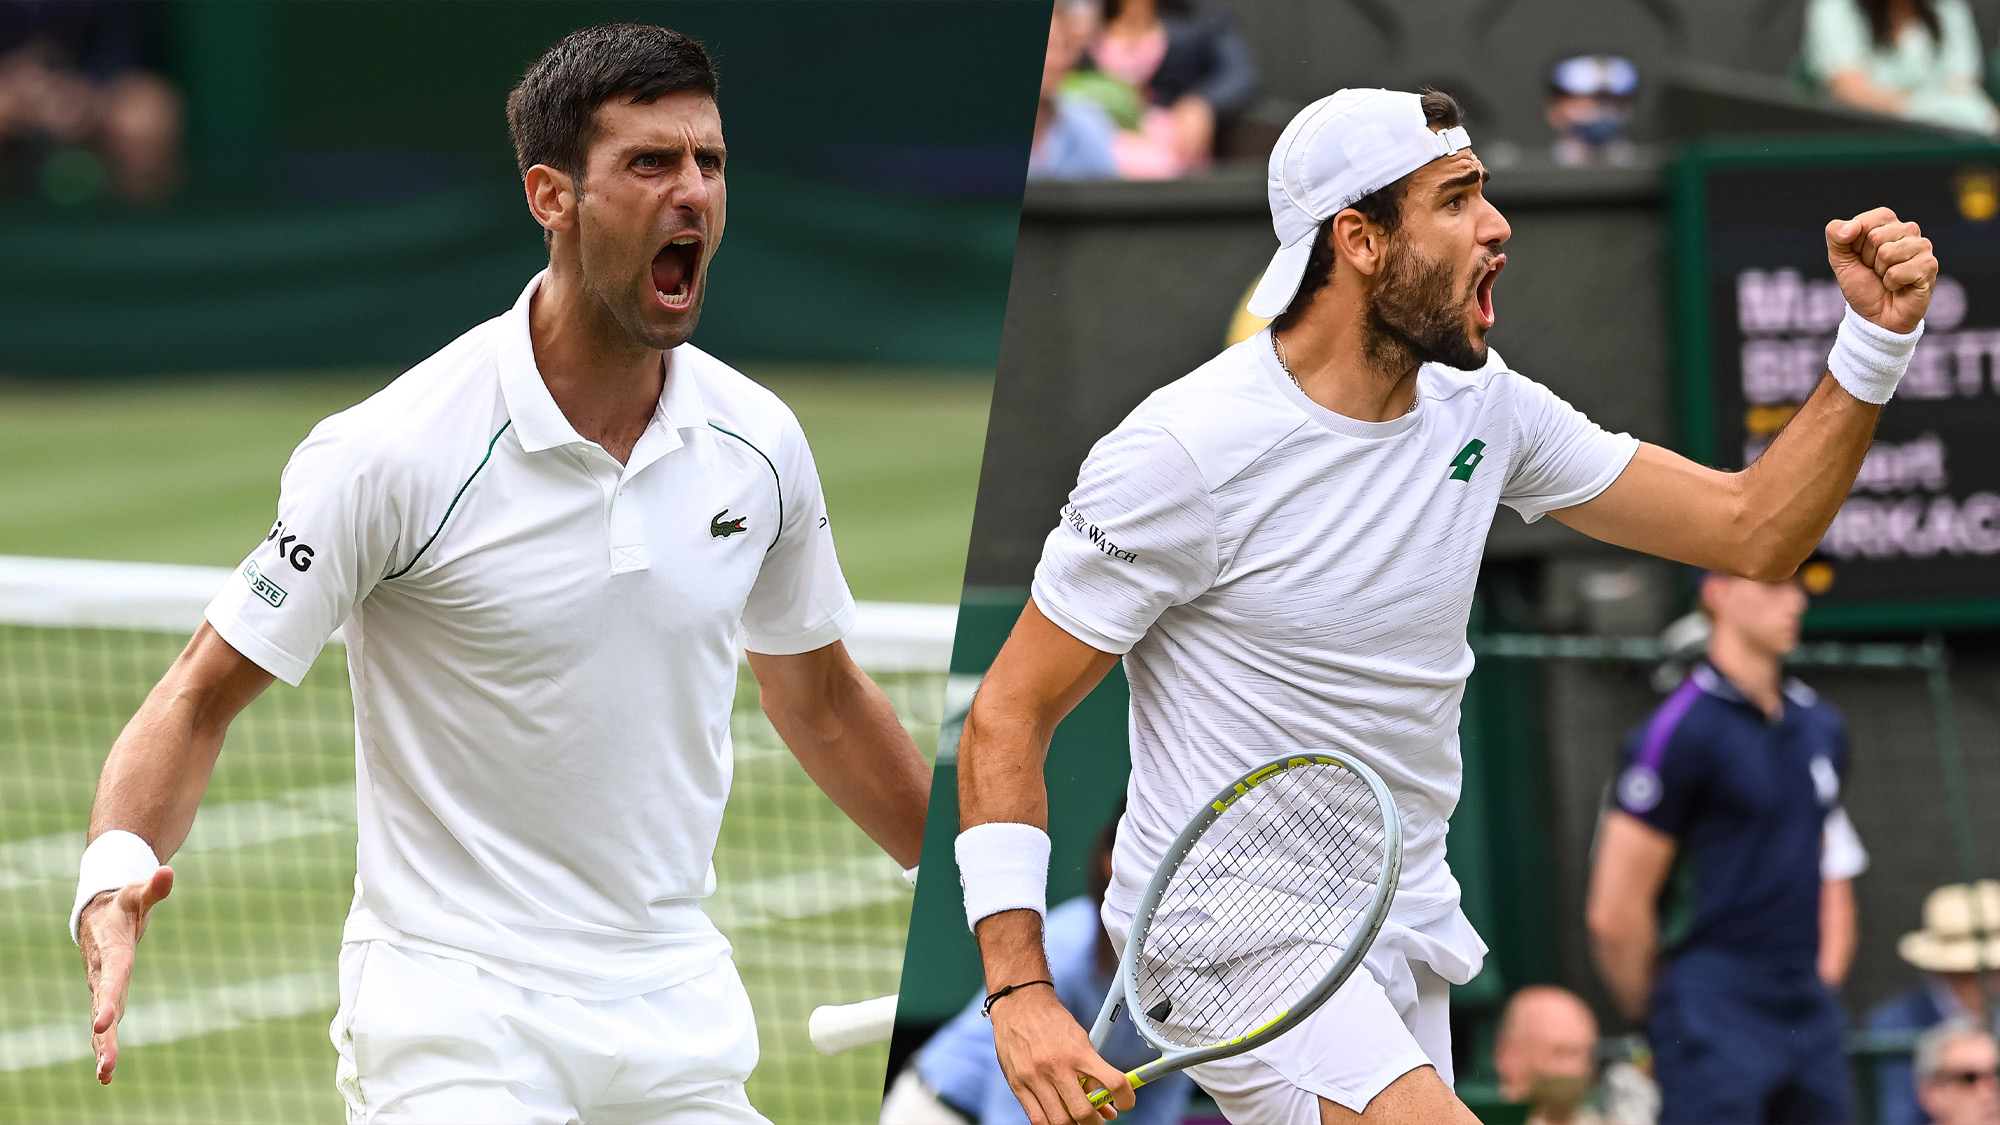 Djokovic vs Berrettini live stream how to watch Wimbledon Men's Final